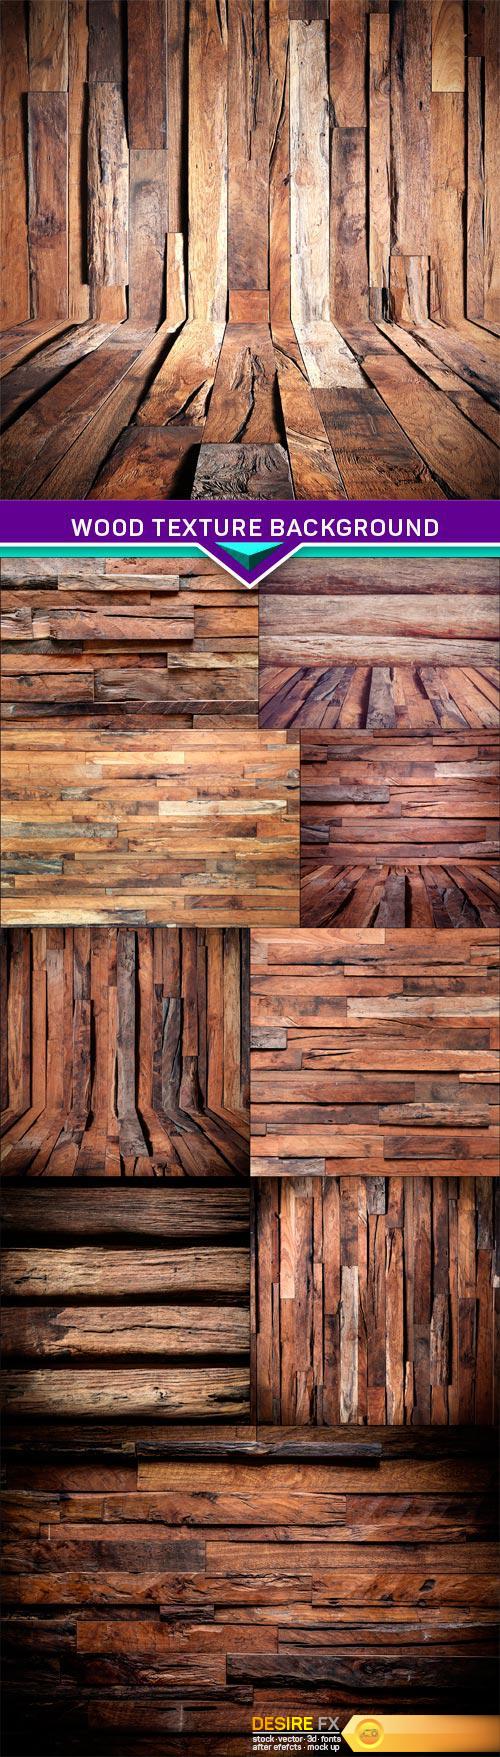 Wood texture background 10X JPEG